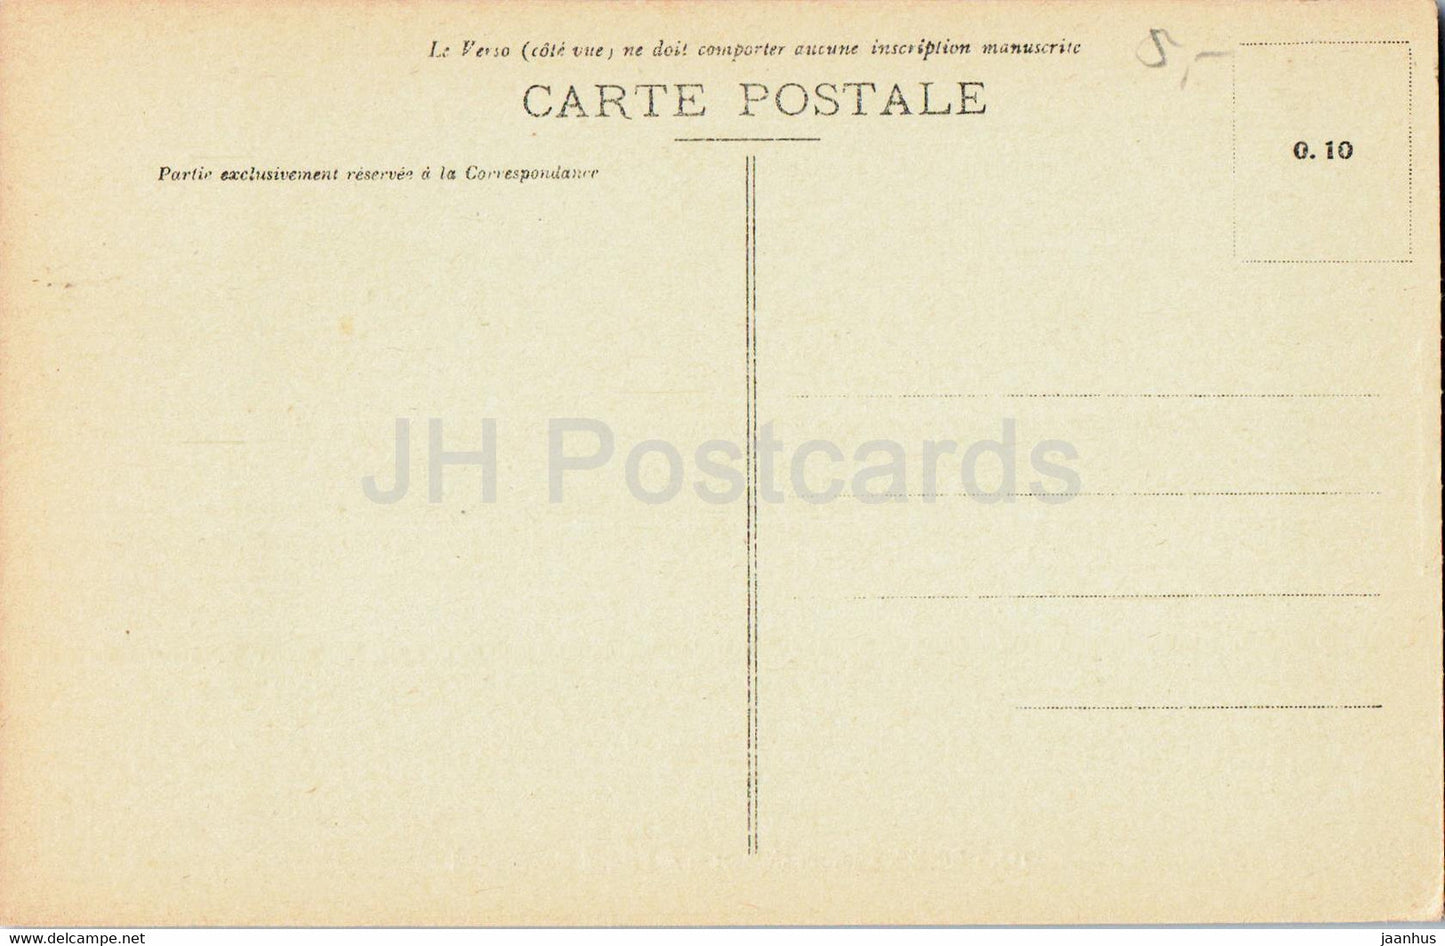 Reims - Jardin Colbert vers l'Hotel Continental - hotel - 112 - old postcard - France - unused